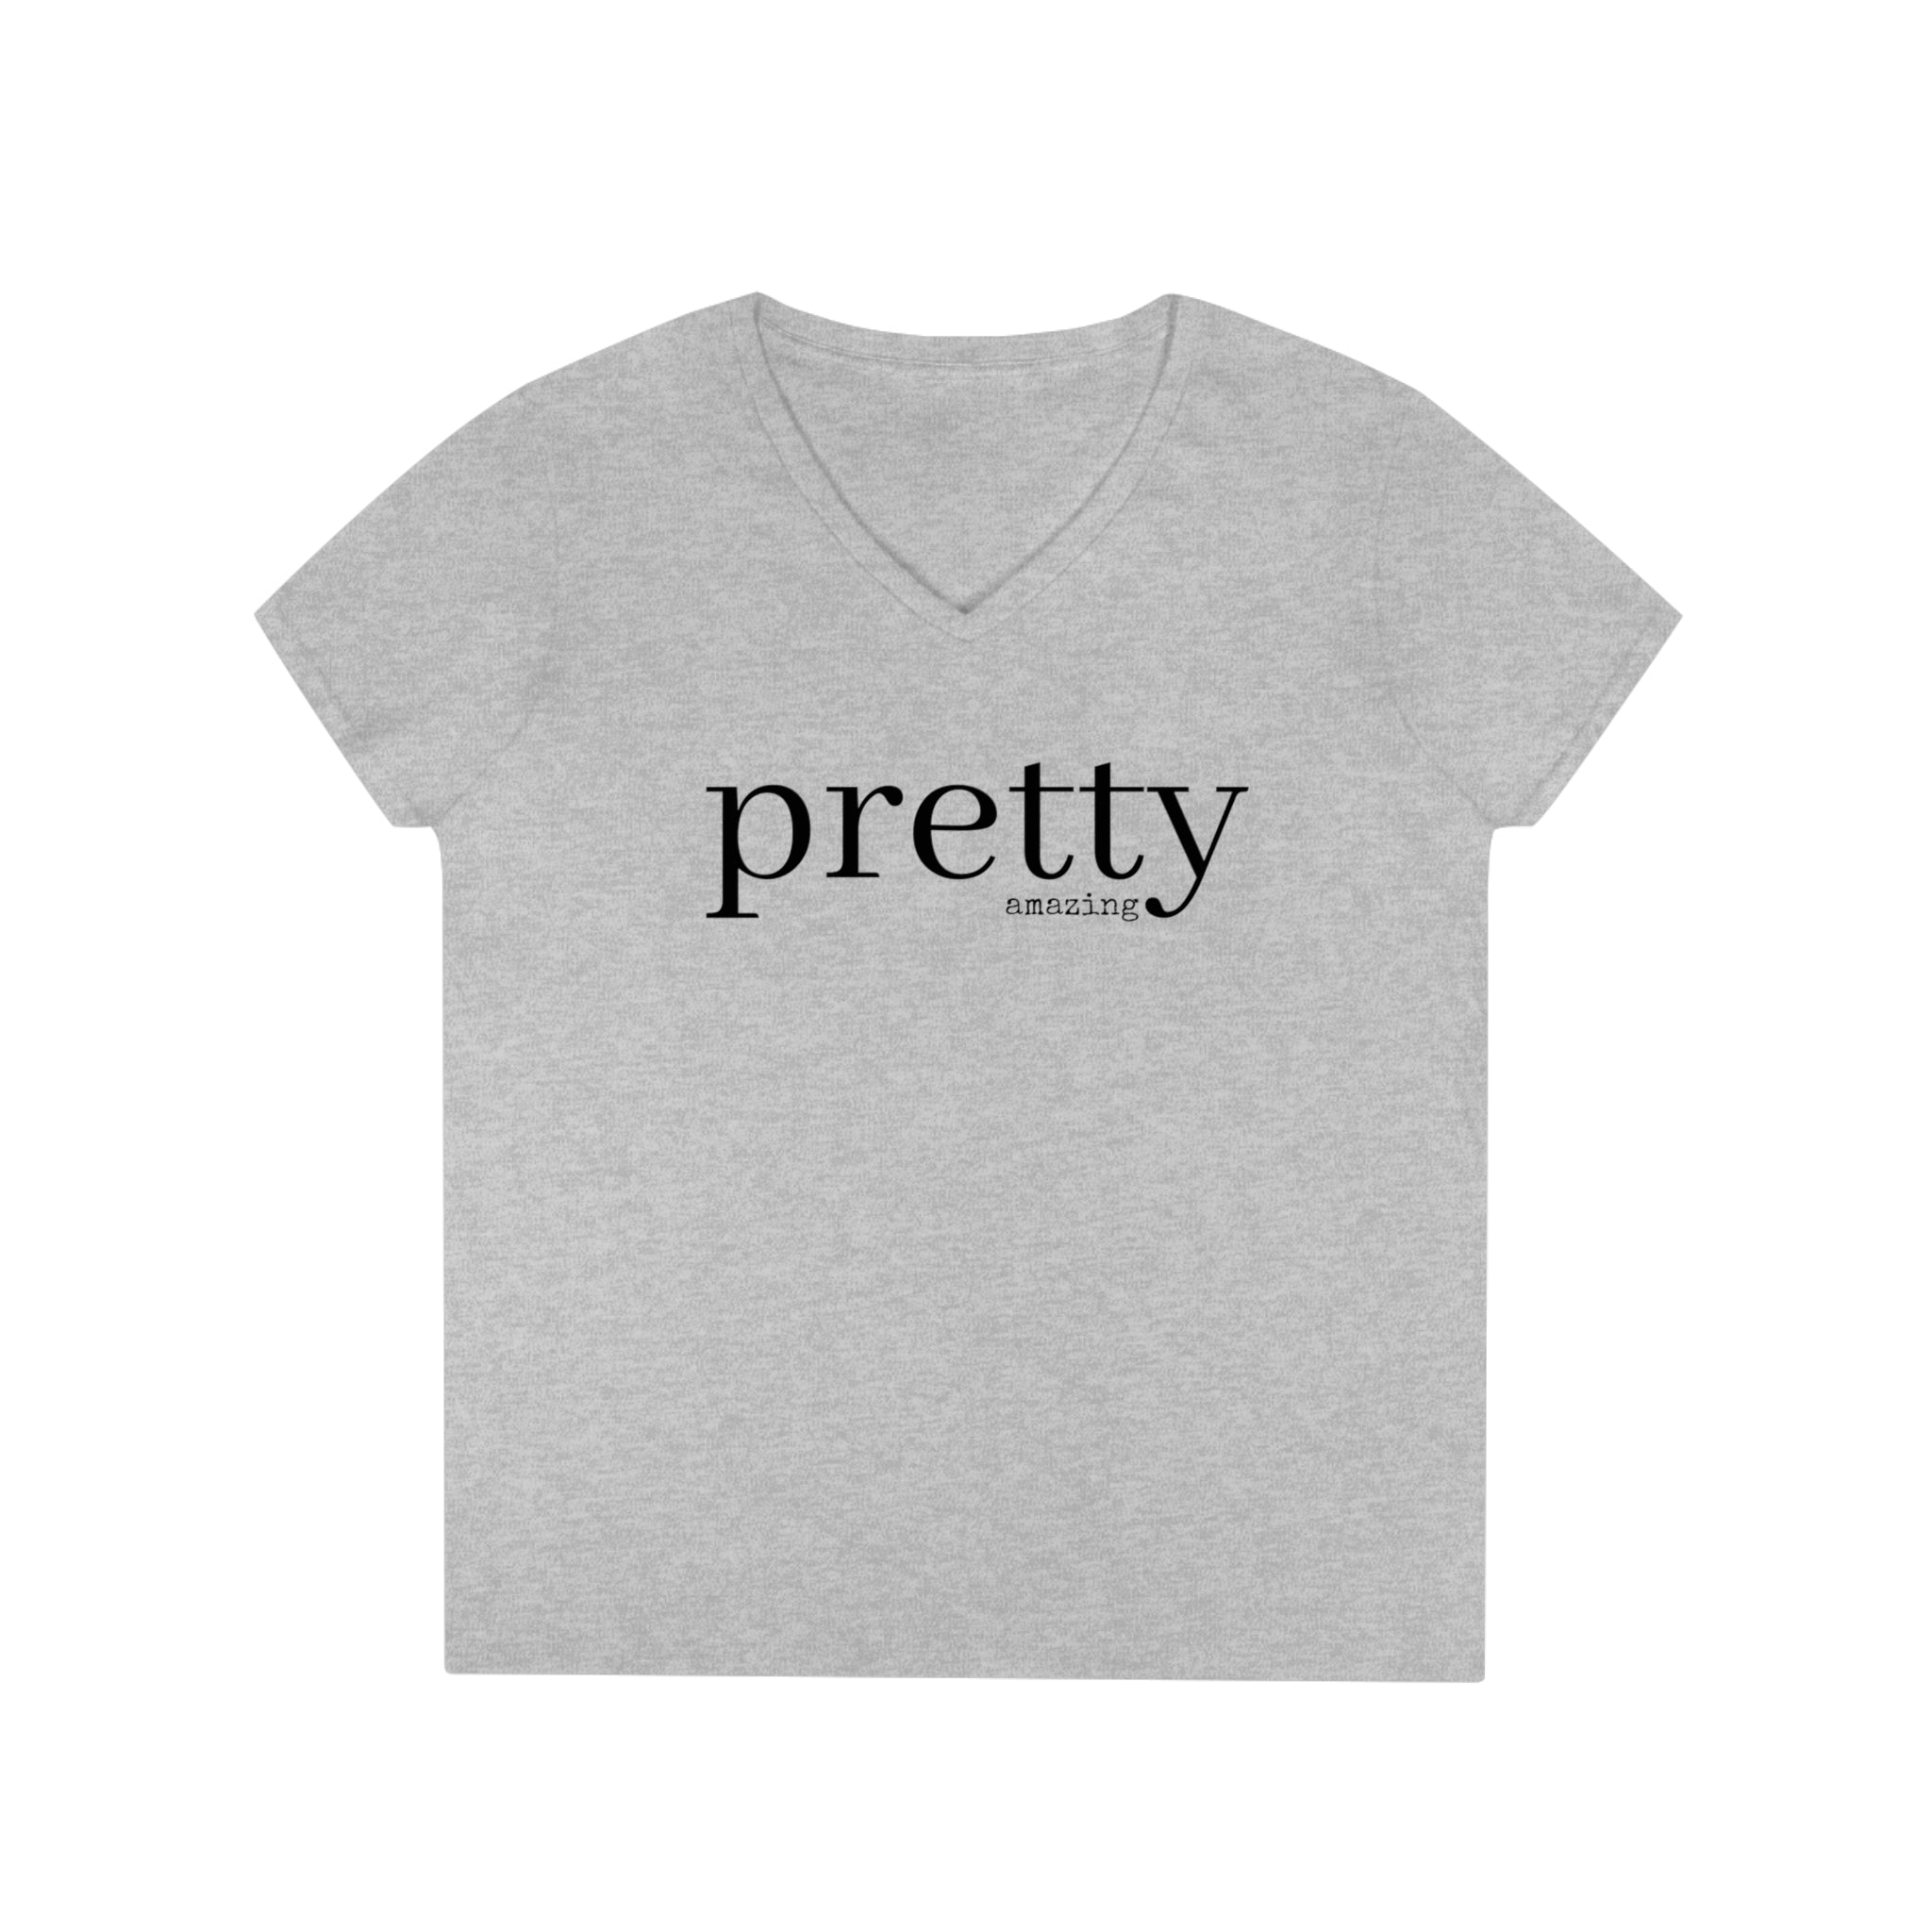  PRETTY amazing Women's V Neck T-shirt, Cute Graphic Tee V-neck2XLSportGrey